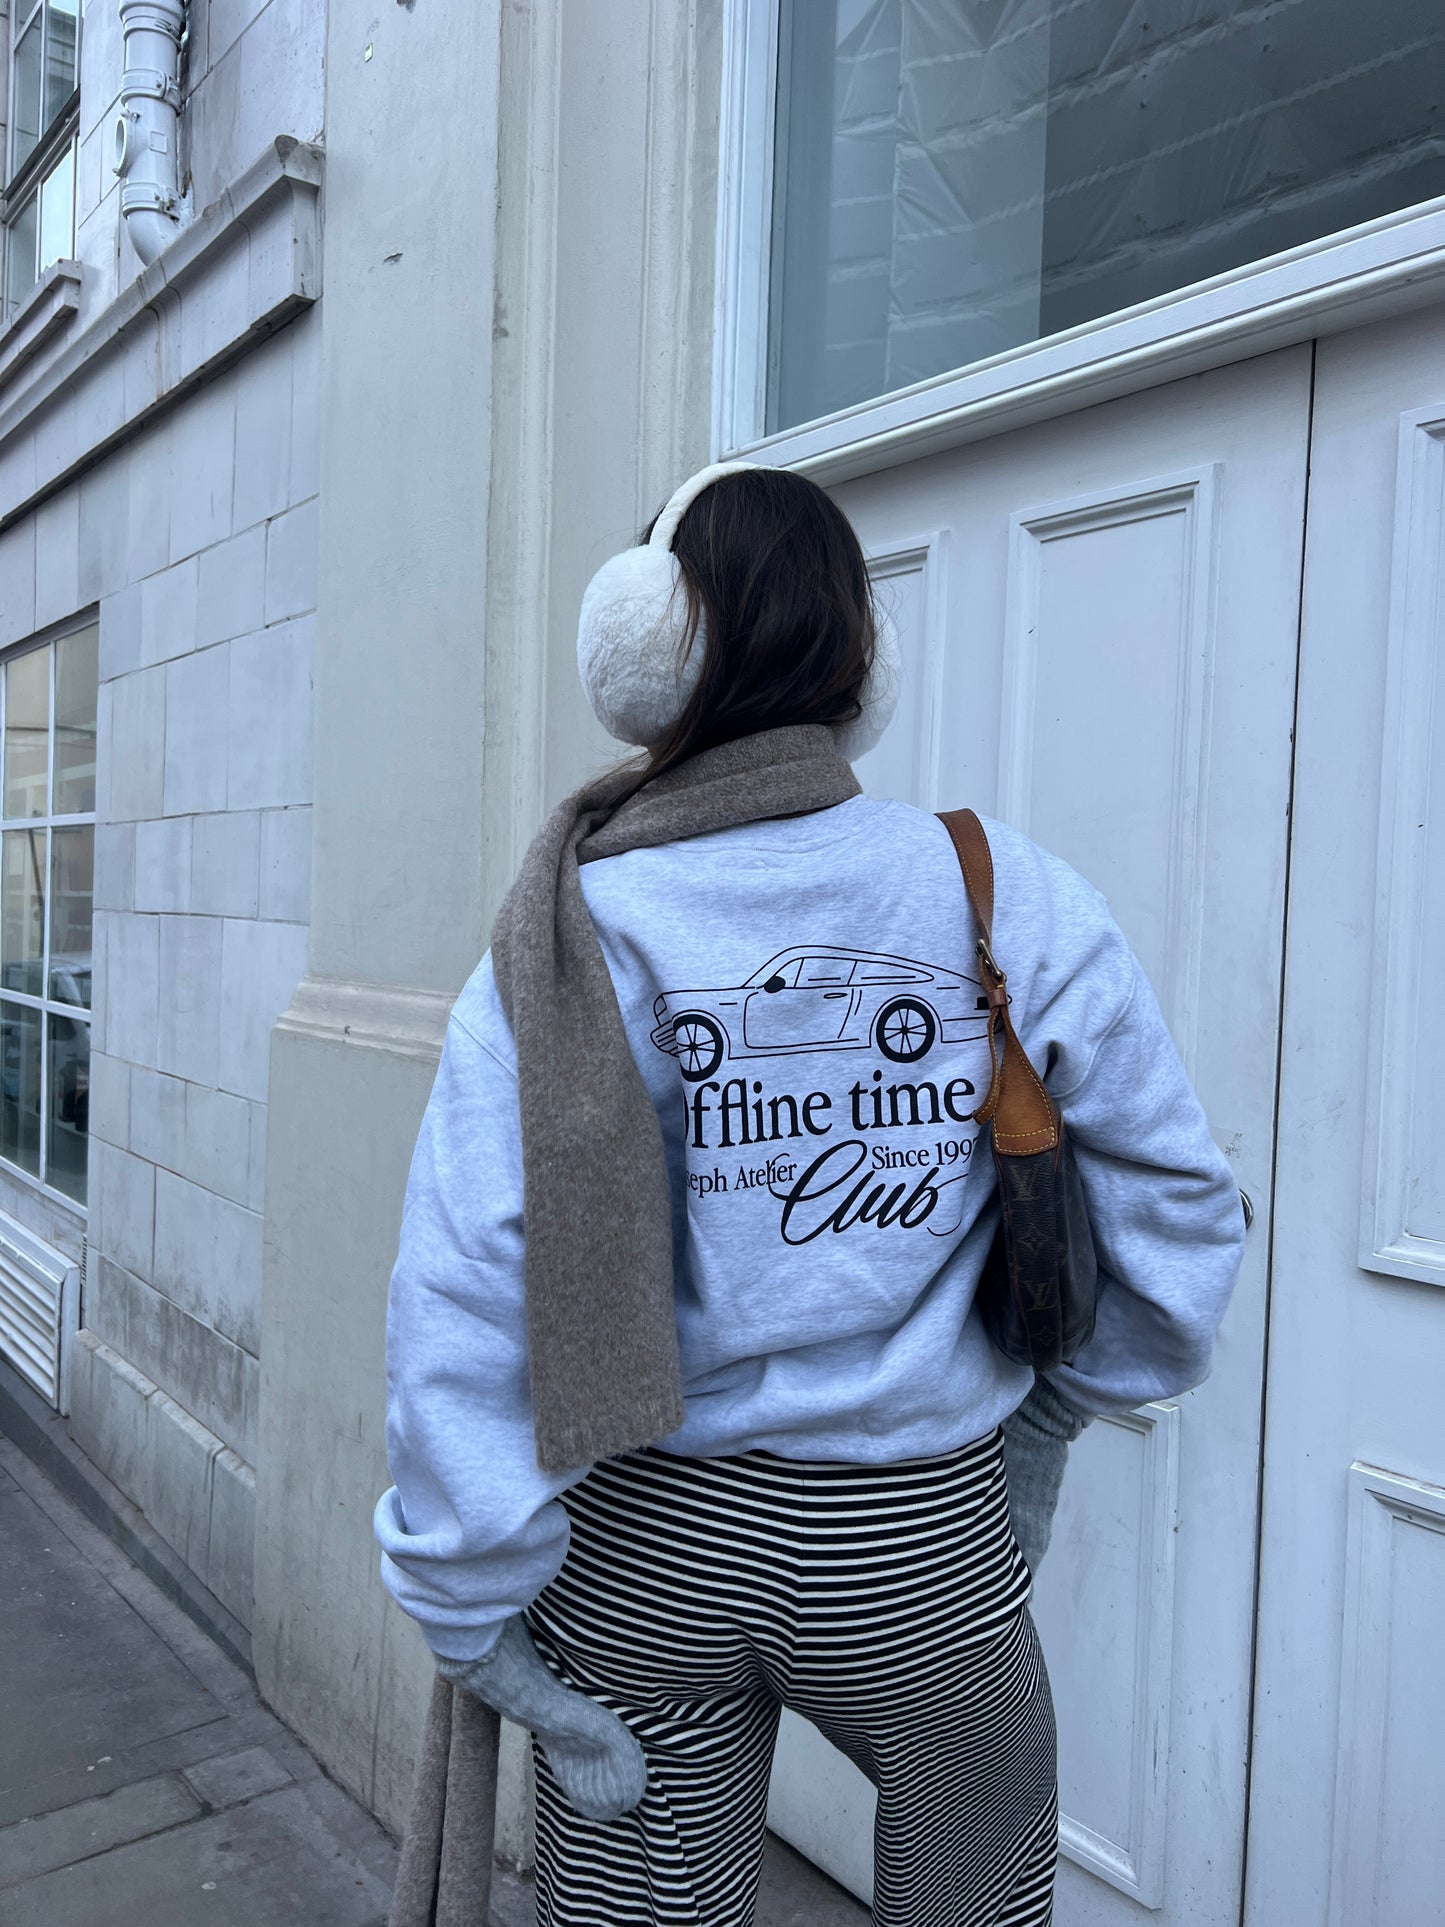 offline time cozy sweater